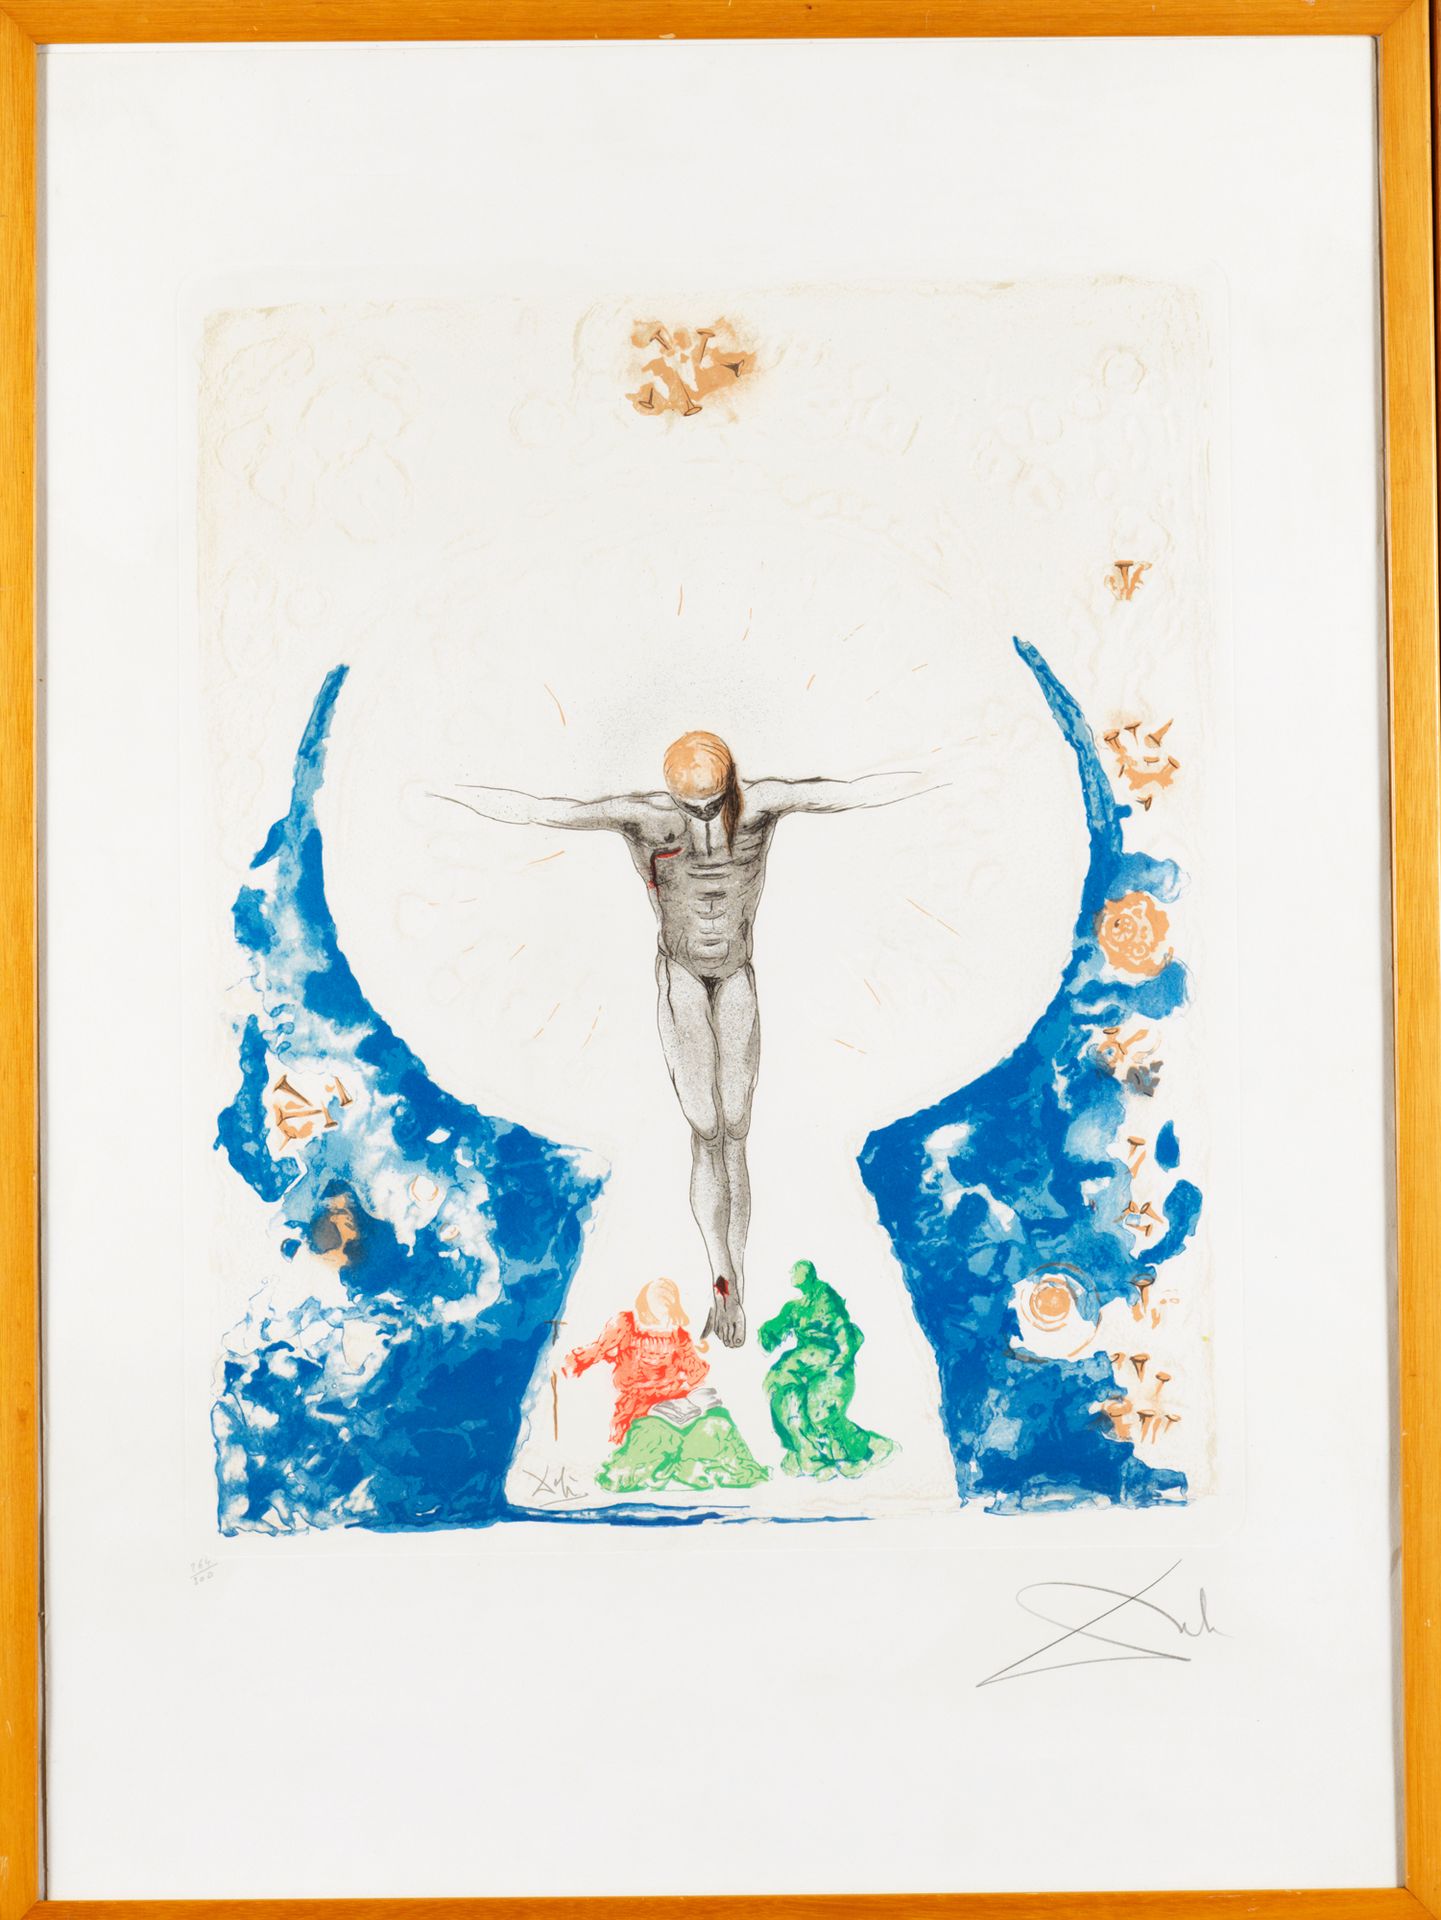 D'après Salvador Dali (1904-1989) L'HOSTIE, 1961-1980
Farbige Radierung auf Veli&hellip;